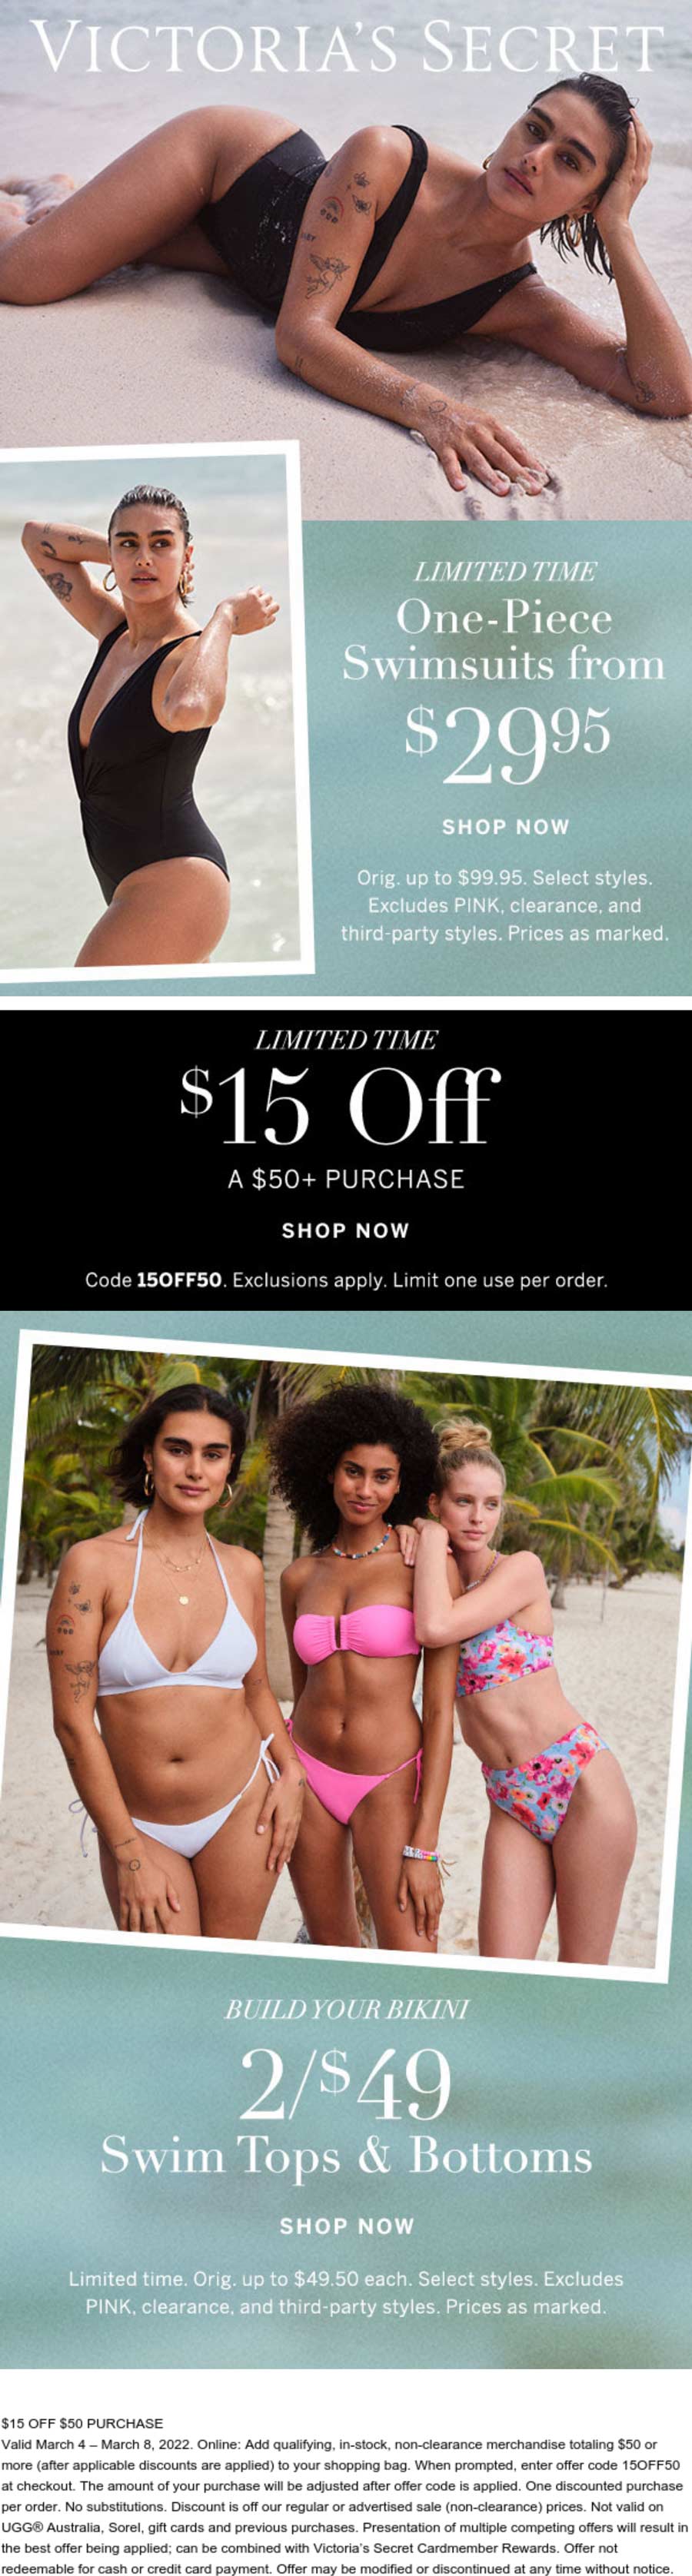 Victorias Secret stores Coupon  $15 off $50 at Victorias Secret via promo code 15OFF50 #victoriassecret 